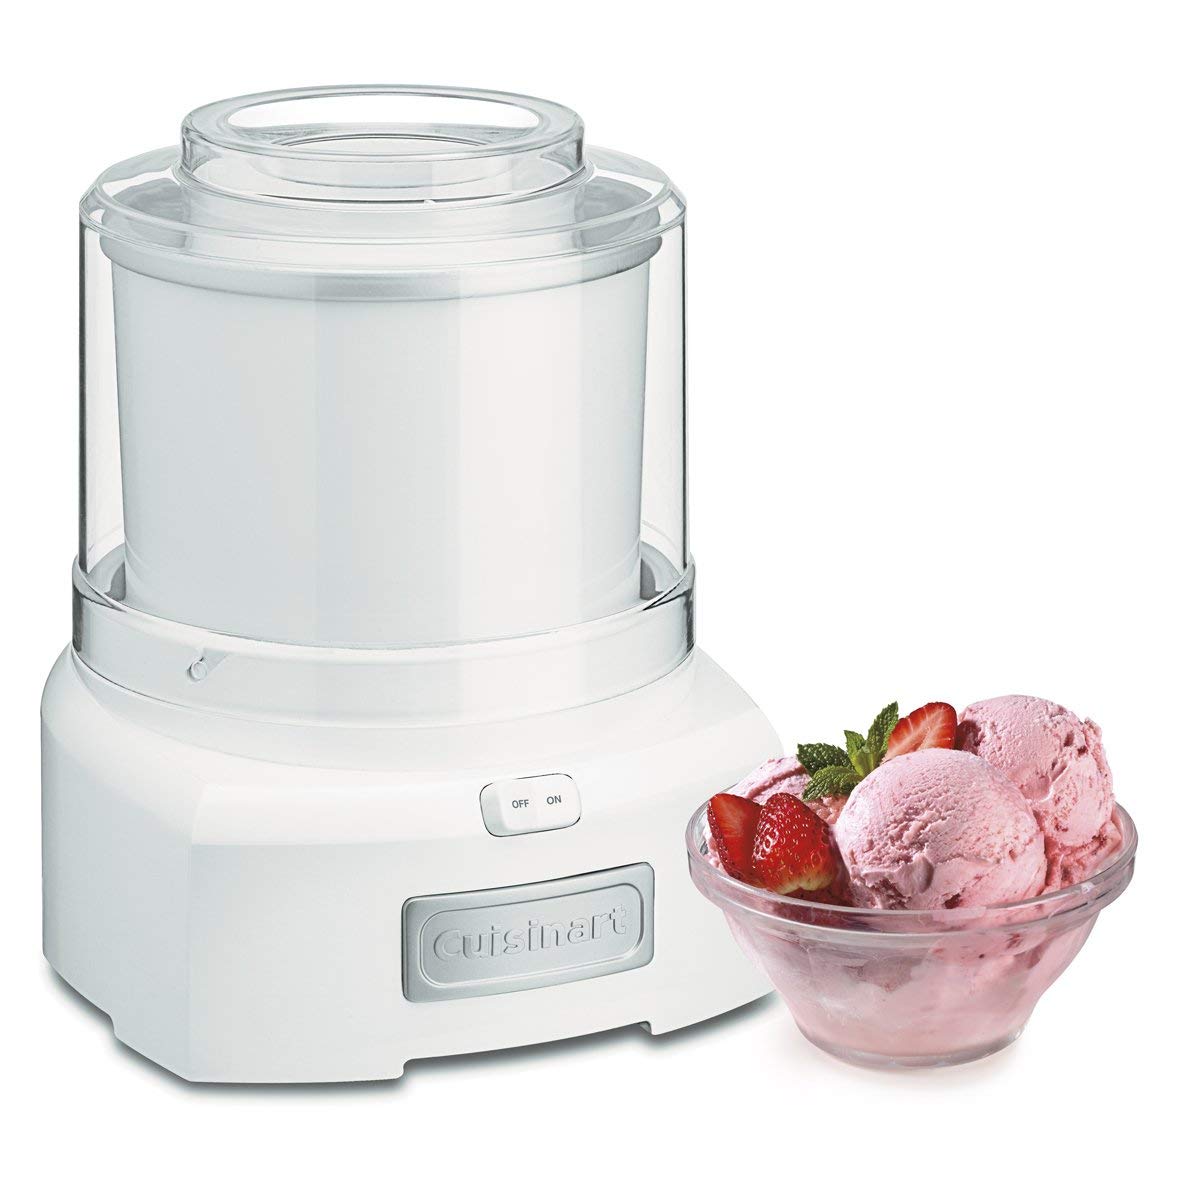 Review of Cuisinart ICE-21 1.5 Quart Frozen Yogurt-Ice Cream Maker